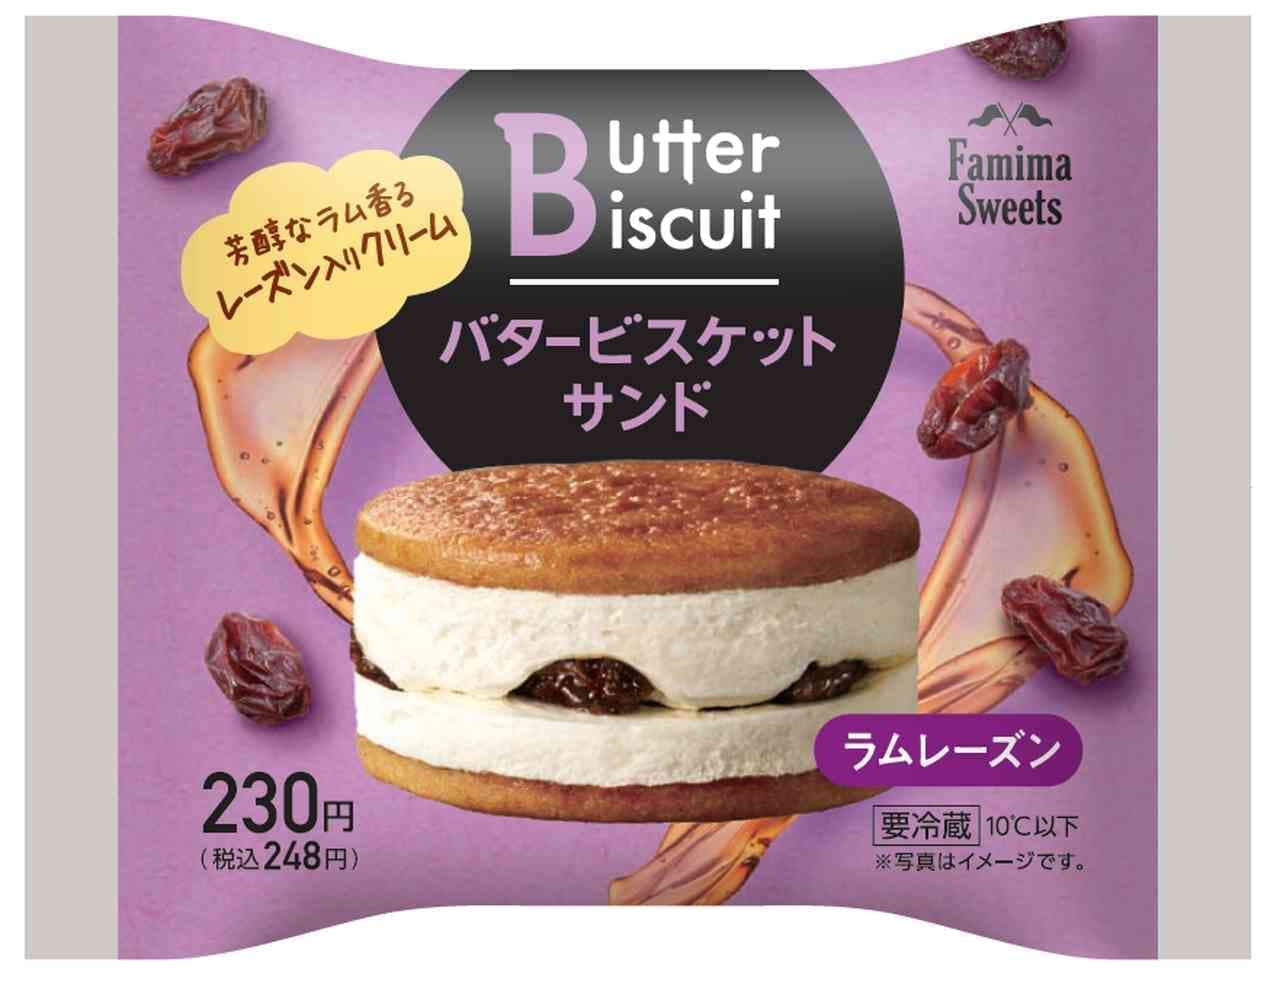 FamilyMart "Butter Biscuit Sand"